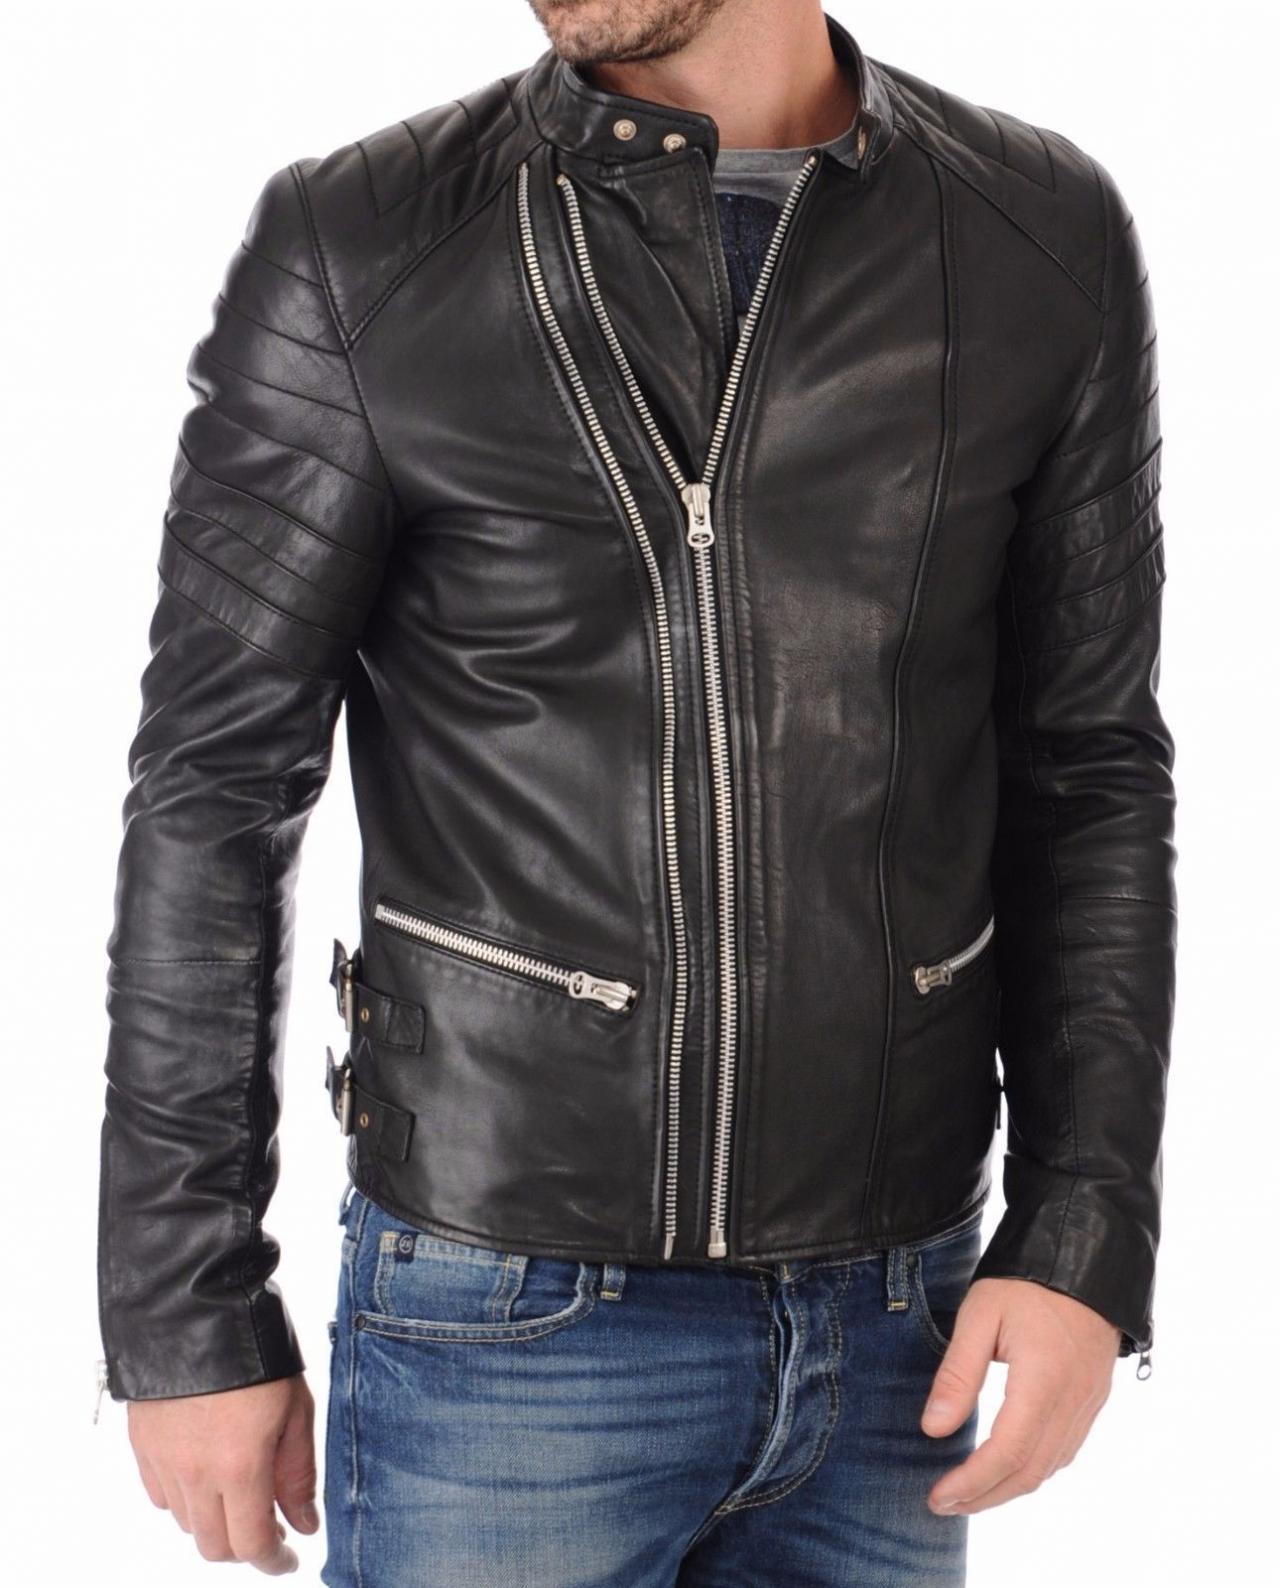 Men Leather Jacket Handmade Black Motorcycle Solid Lambskin Leather -64